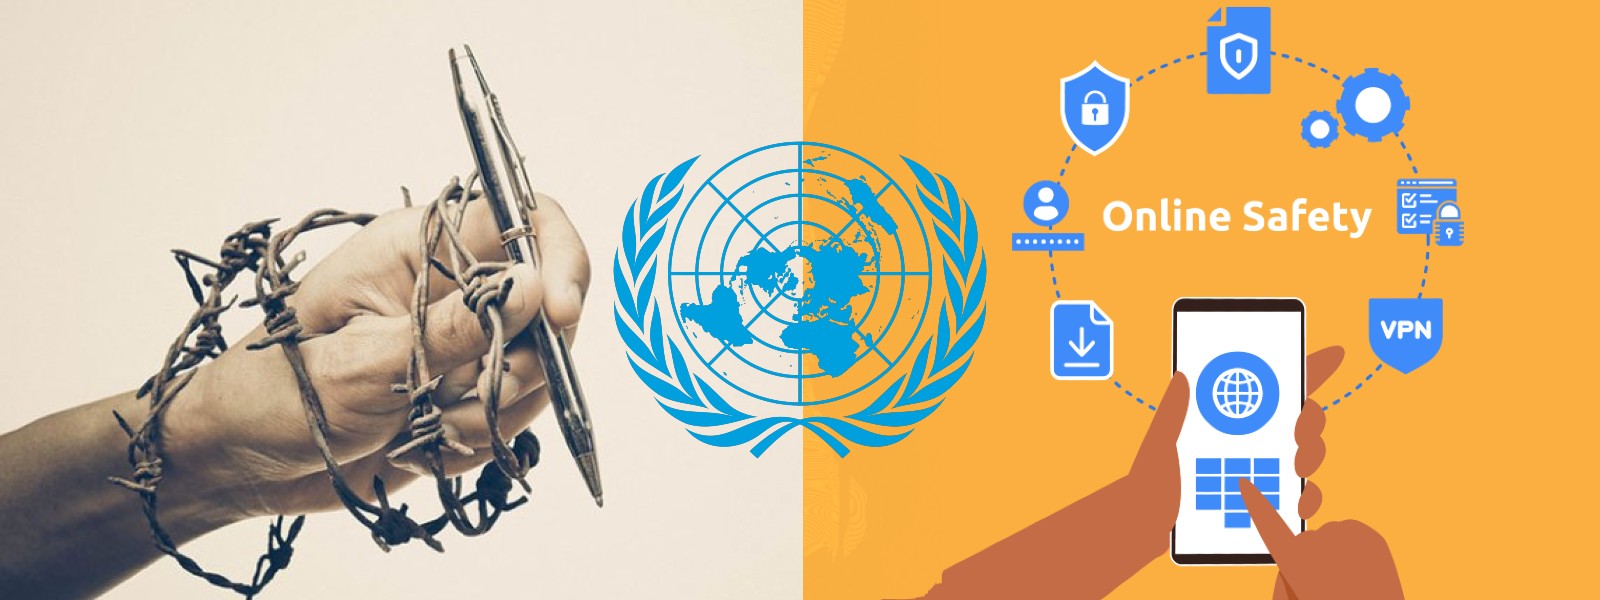 UN warns SL over restricting freedom